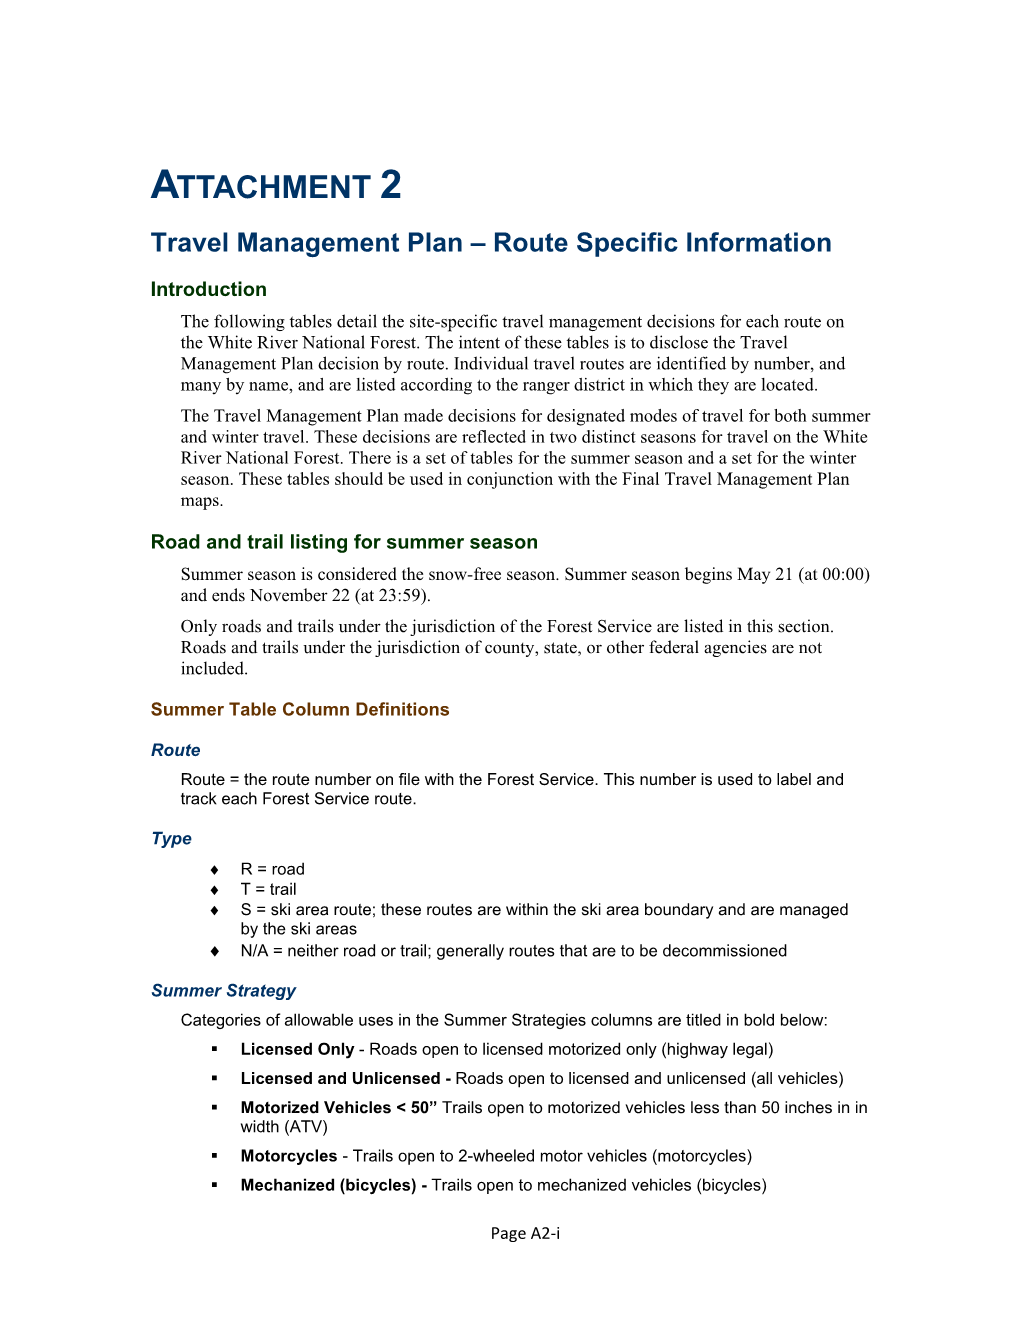 Attachment 2: Travel Management Plan